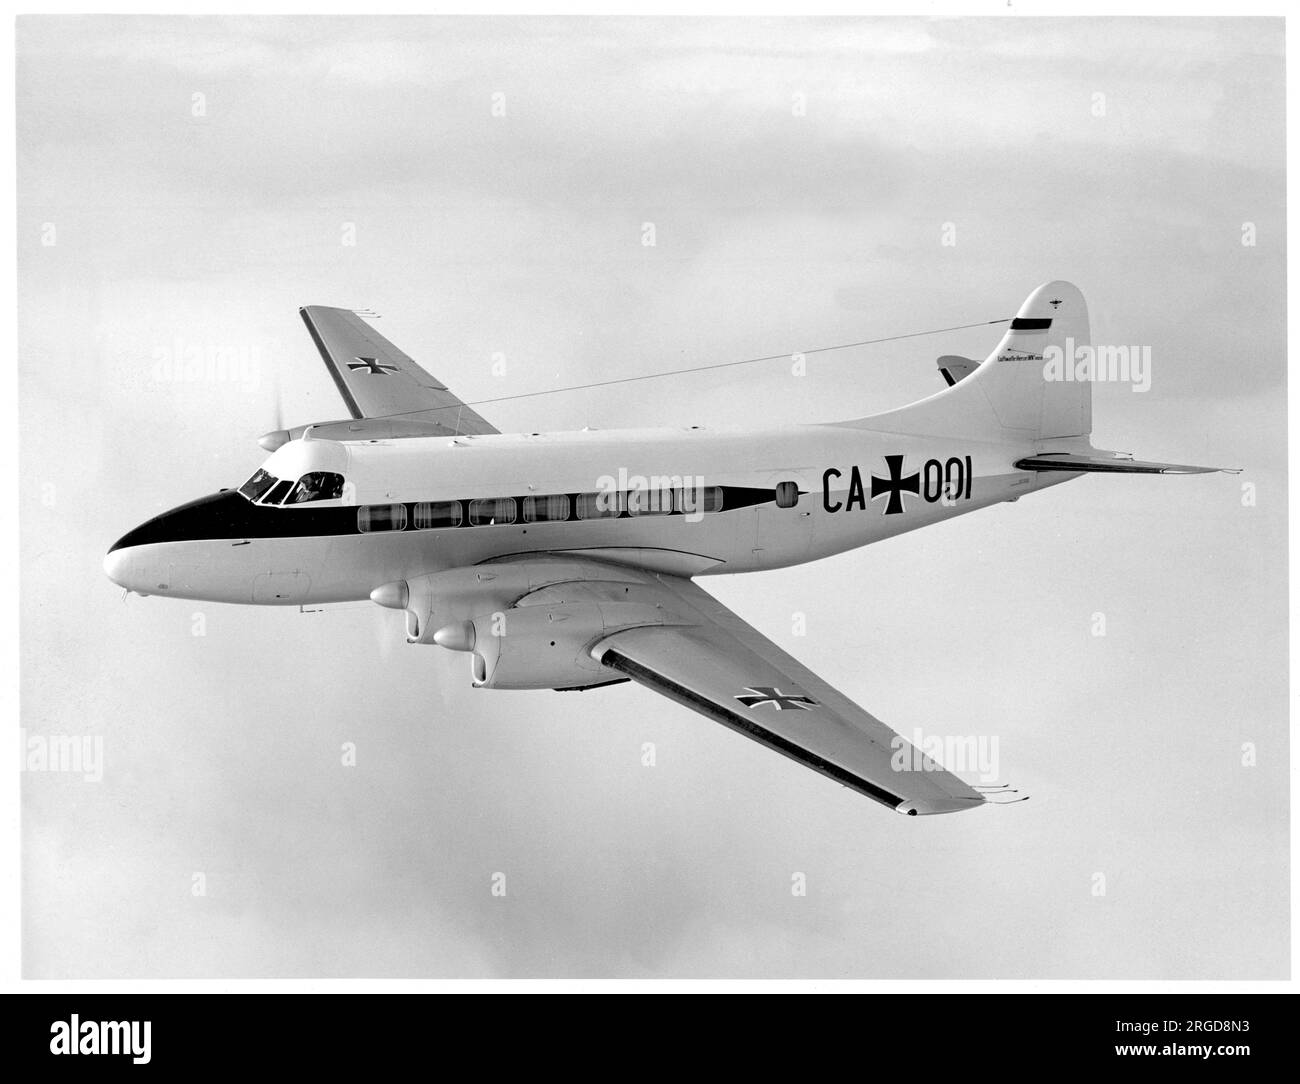 Luftwaffe - de Havilland DH.114 Heron 2B CA+001 (msn 14108) Stock Photo